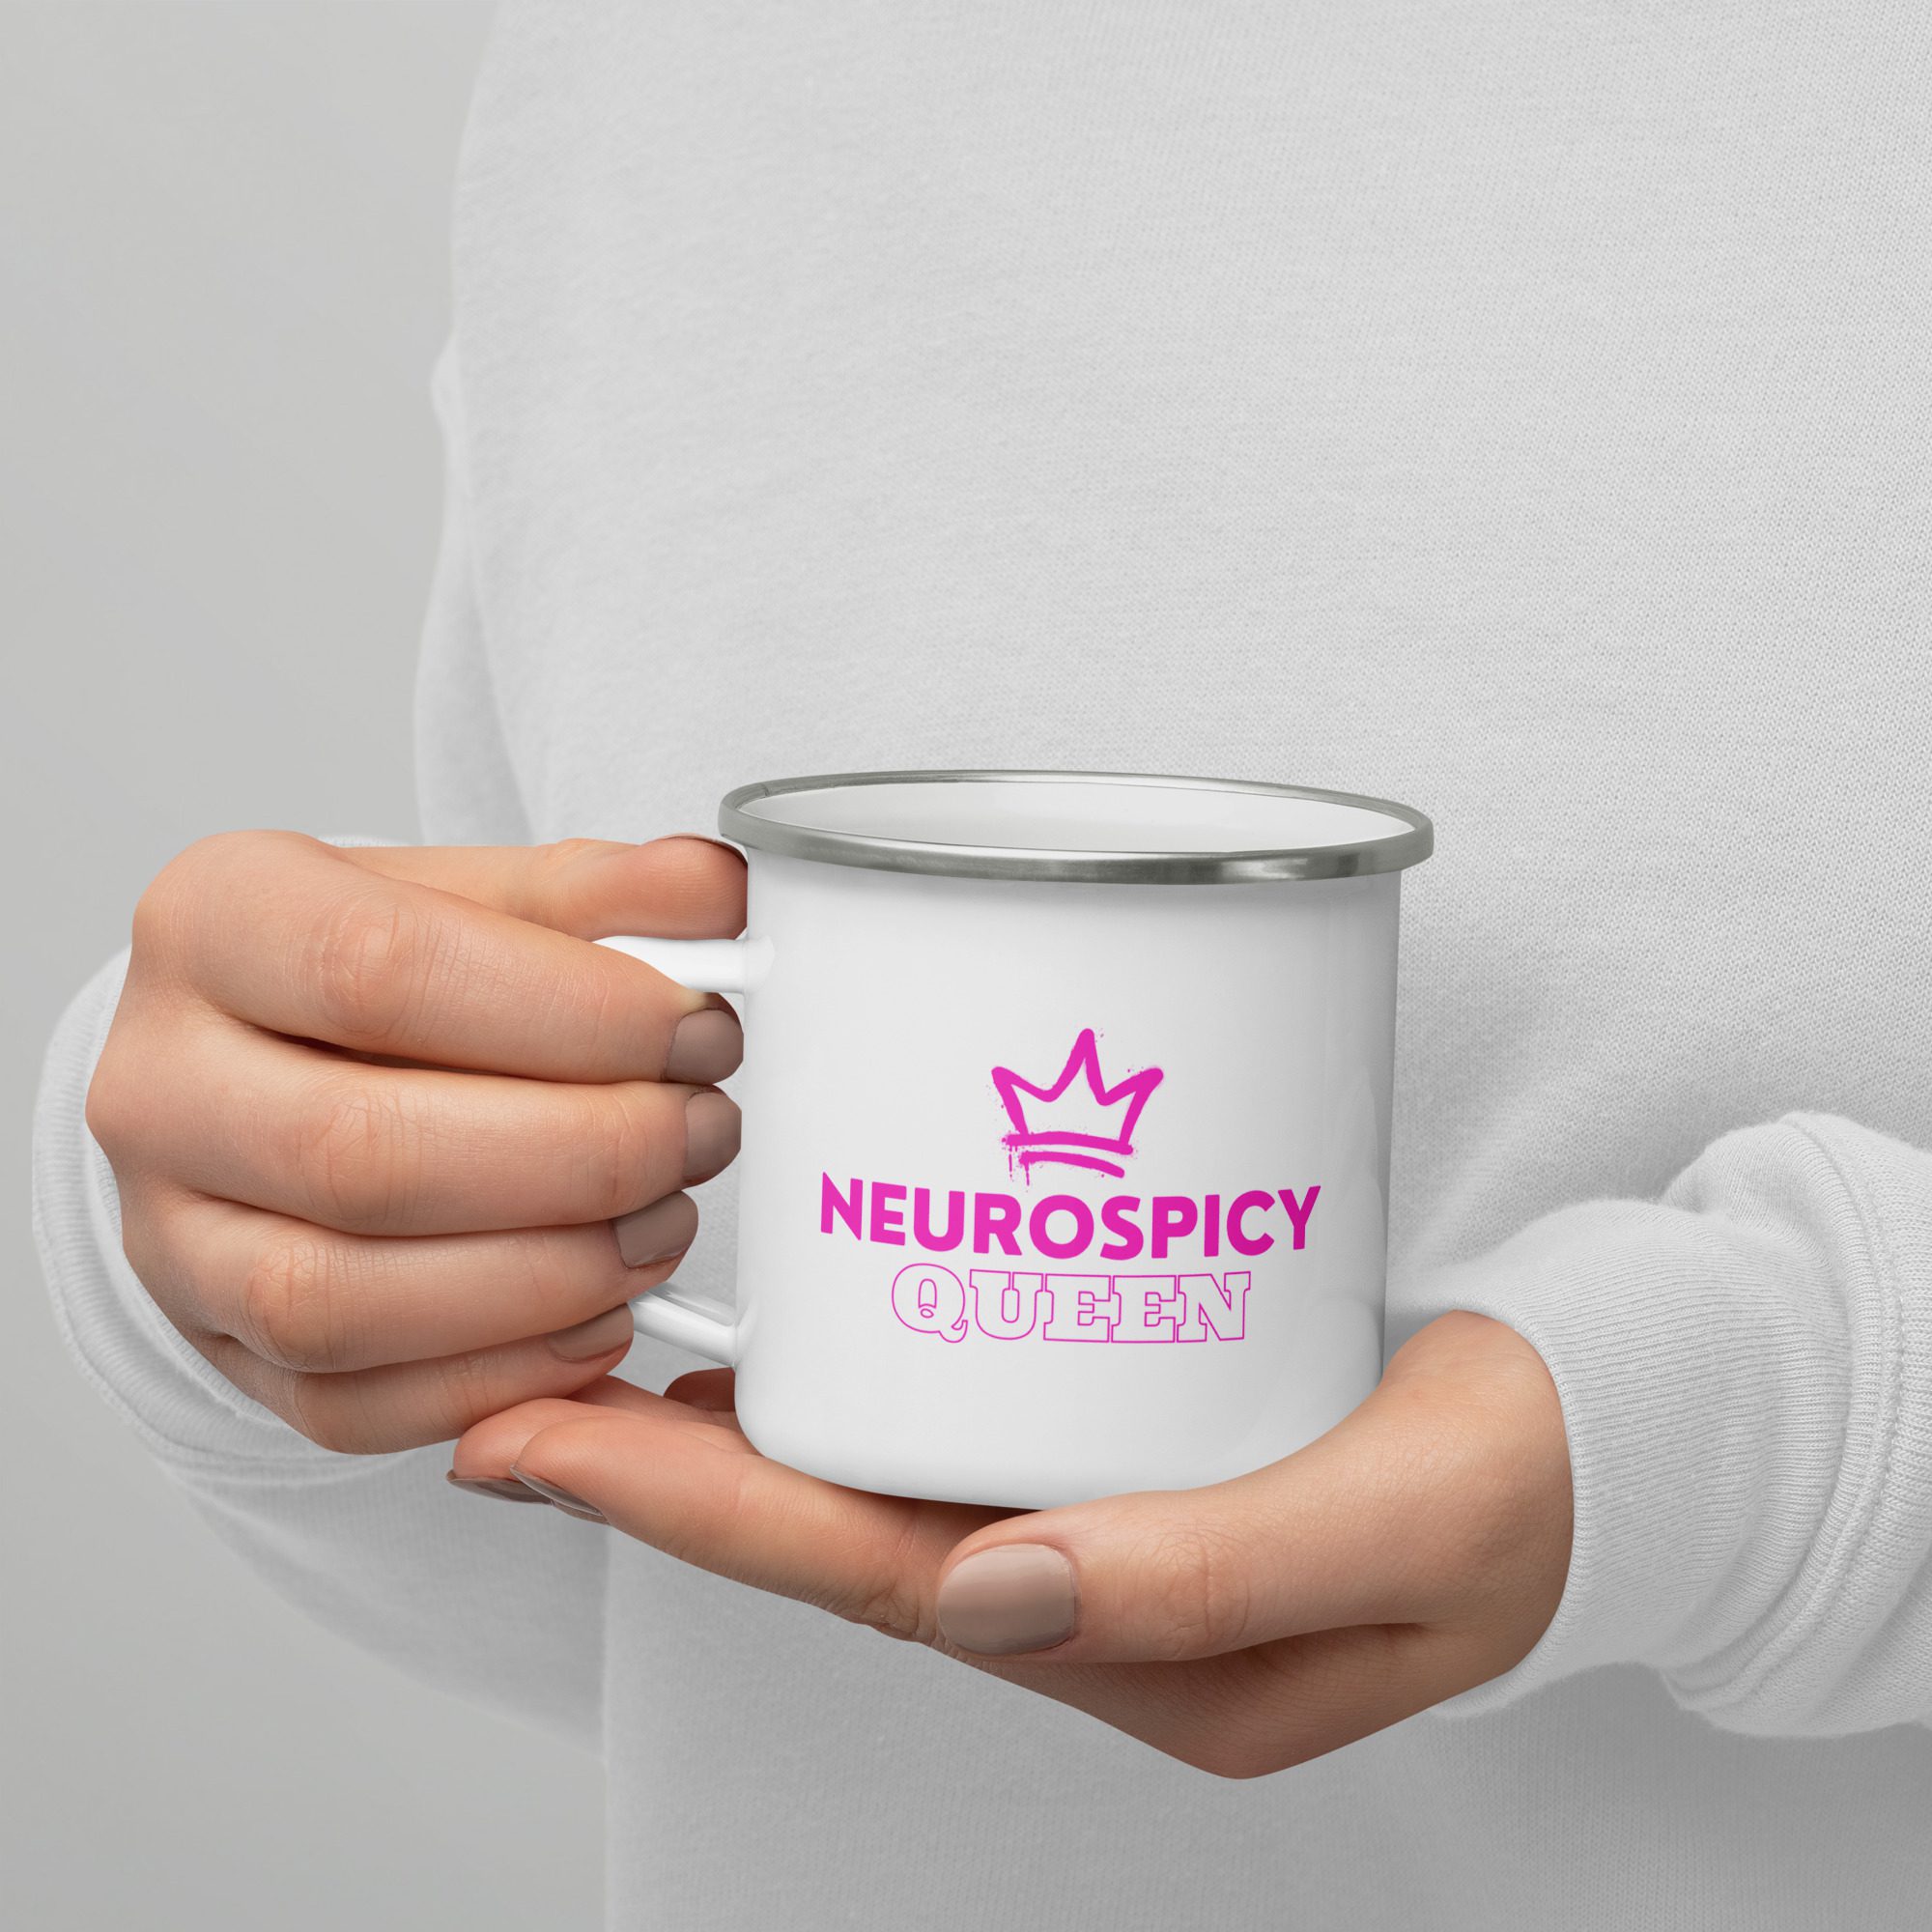 Neurospicy Queen Enamel Mug